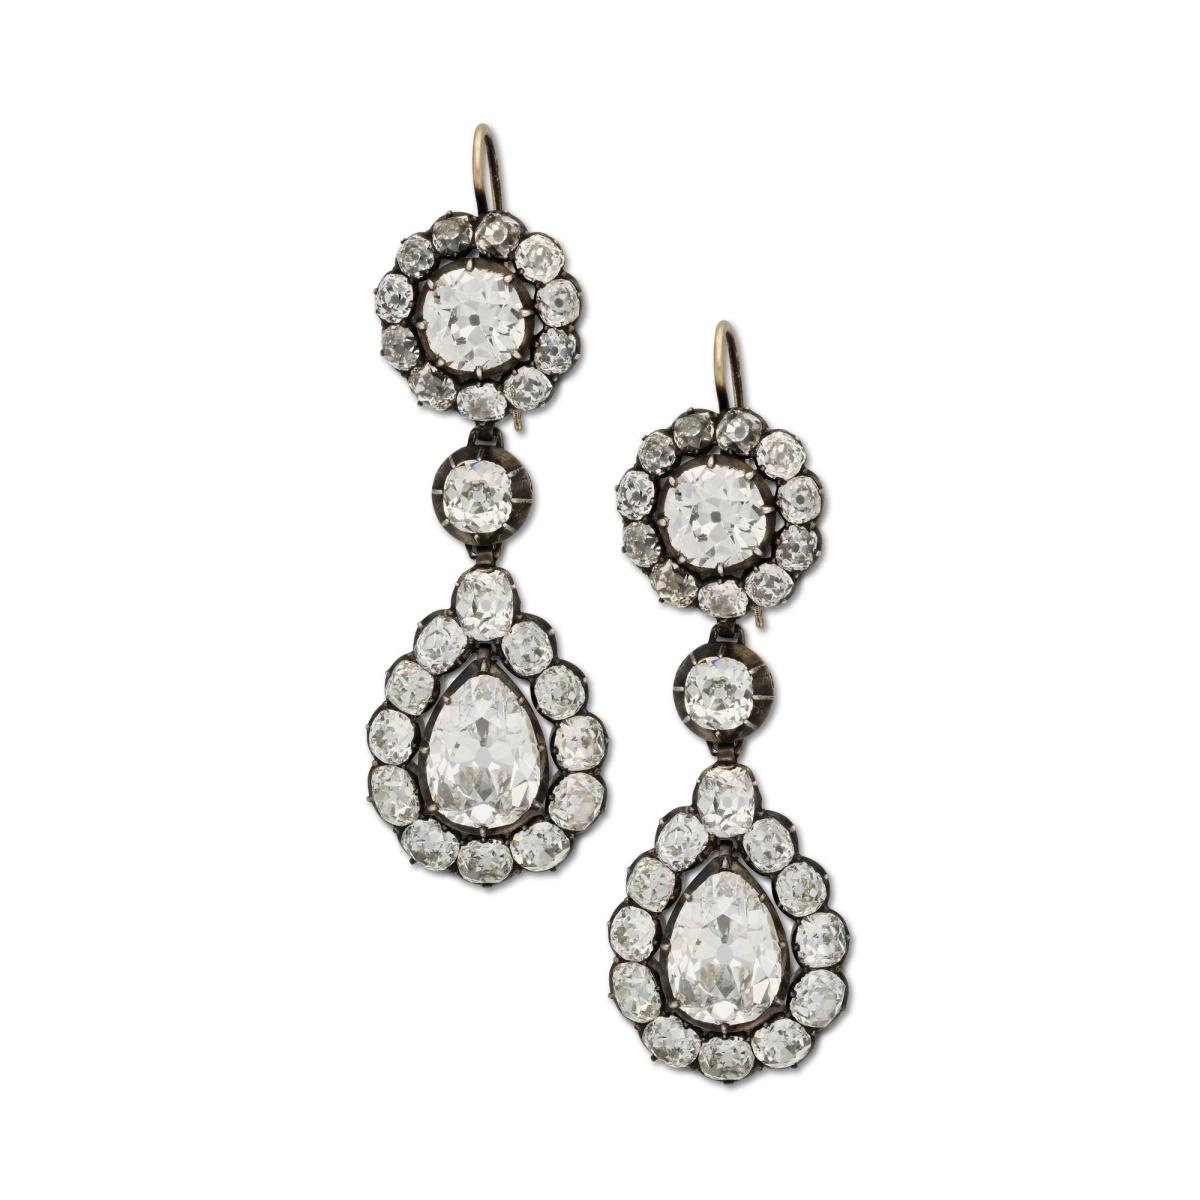 Magnificent Antique Diamond Drop Earrings Circa 1800 | BADA